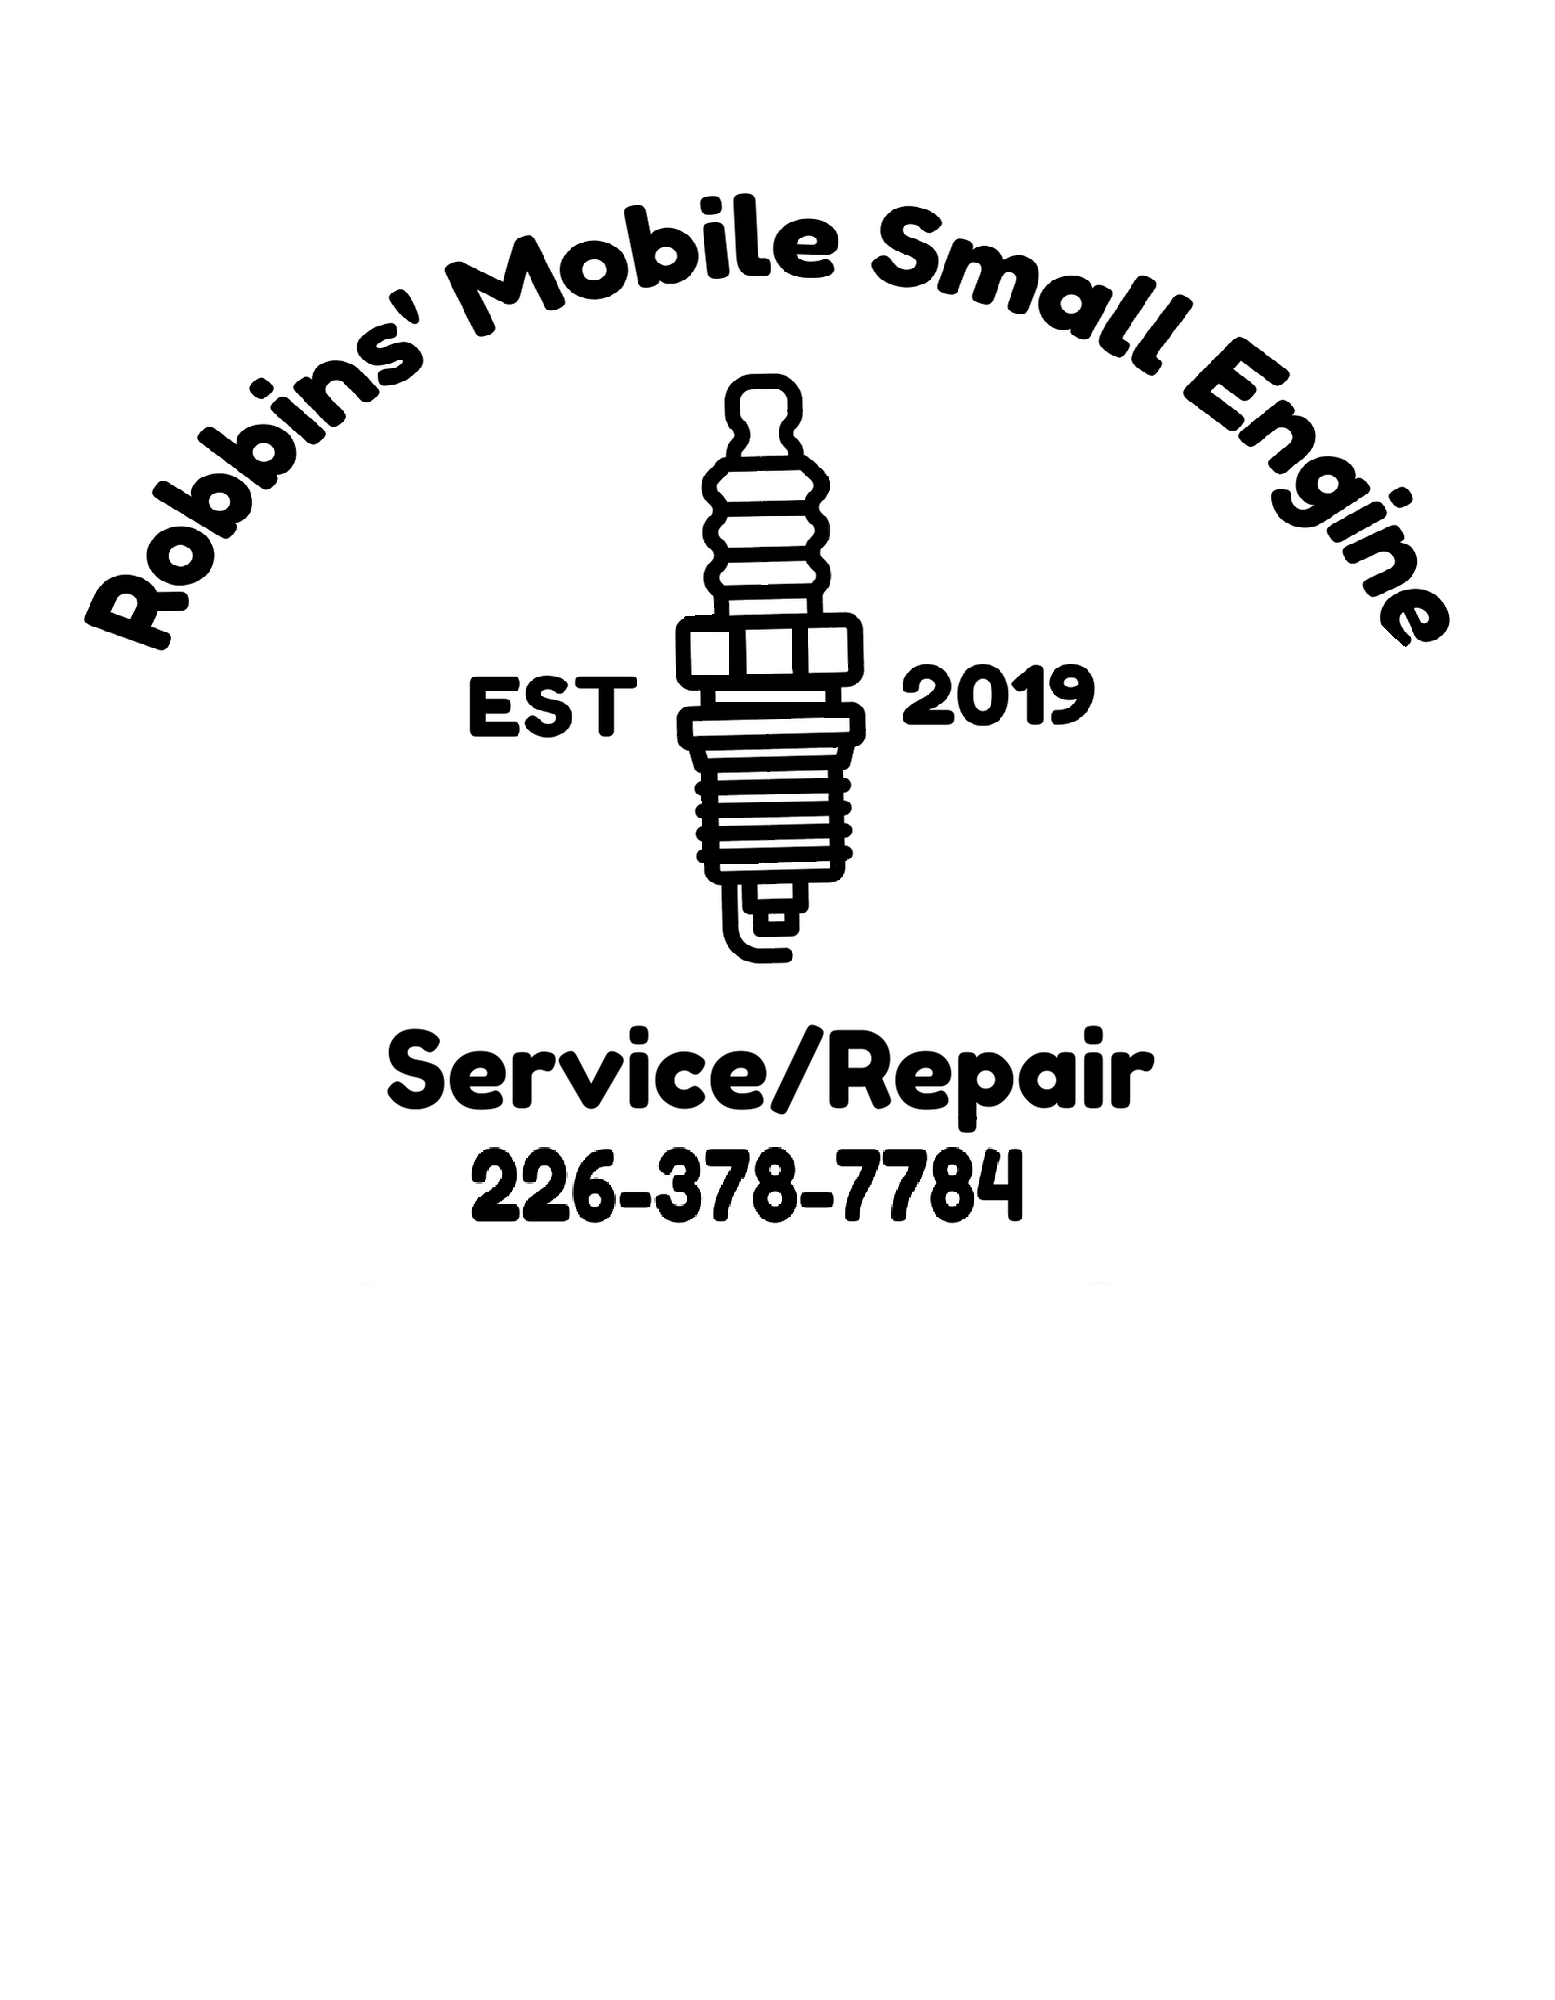 Robbins' Mobile Small Engine Service/Repair